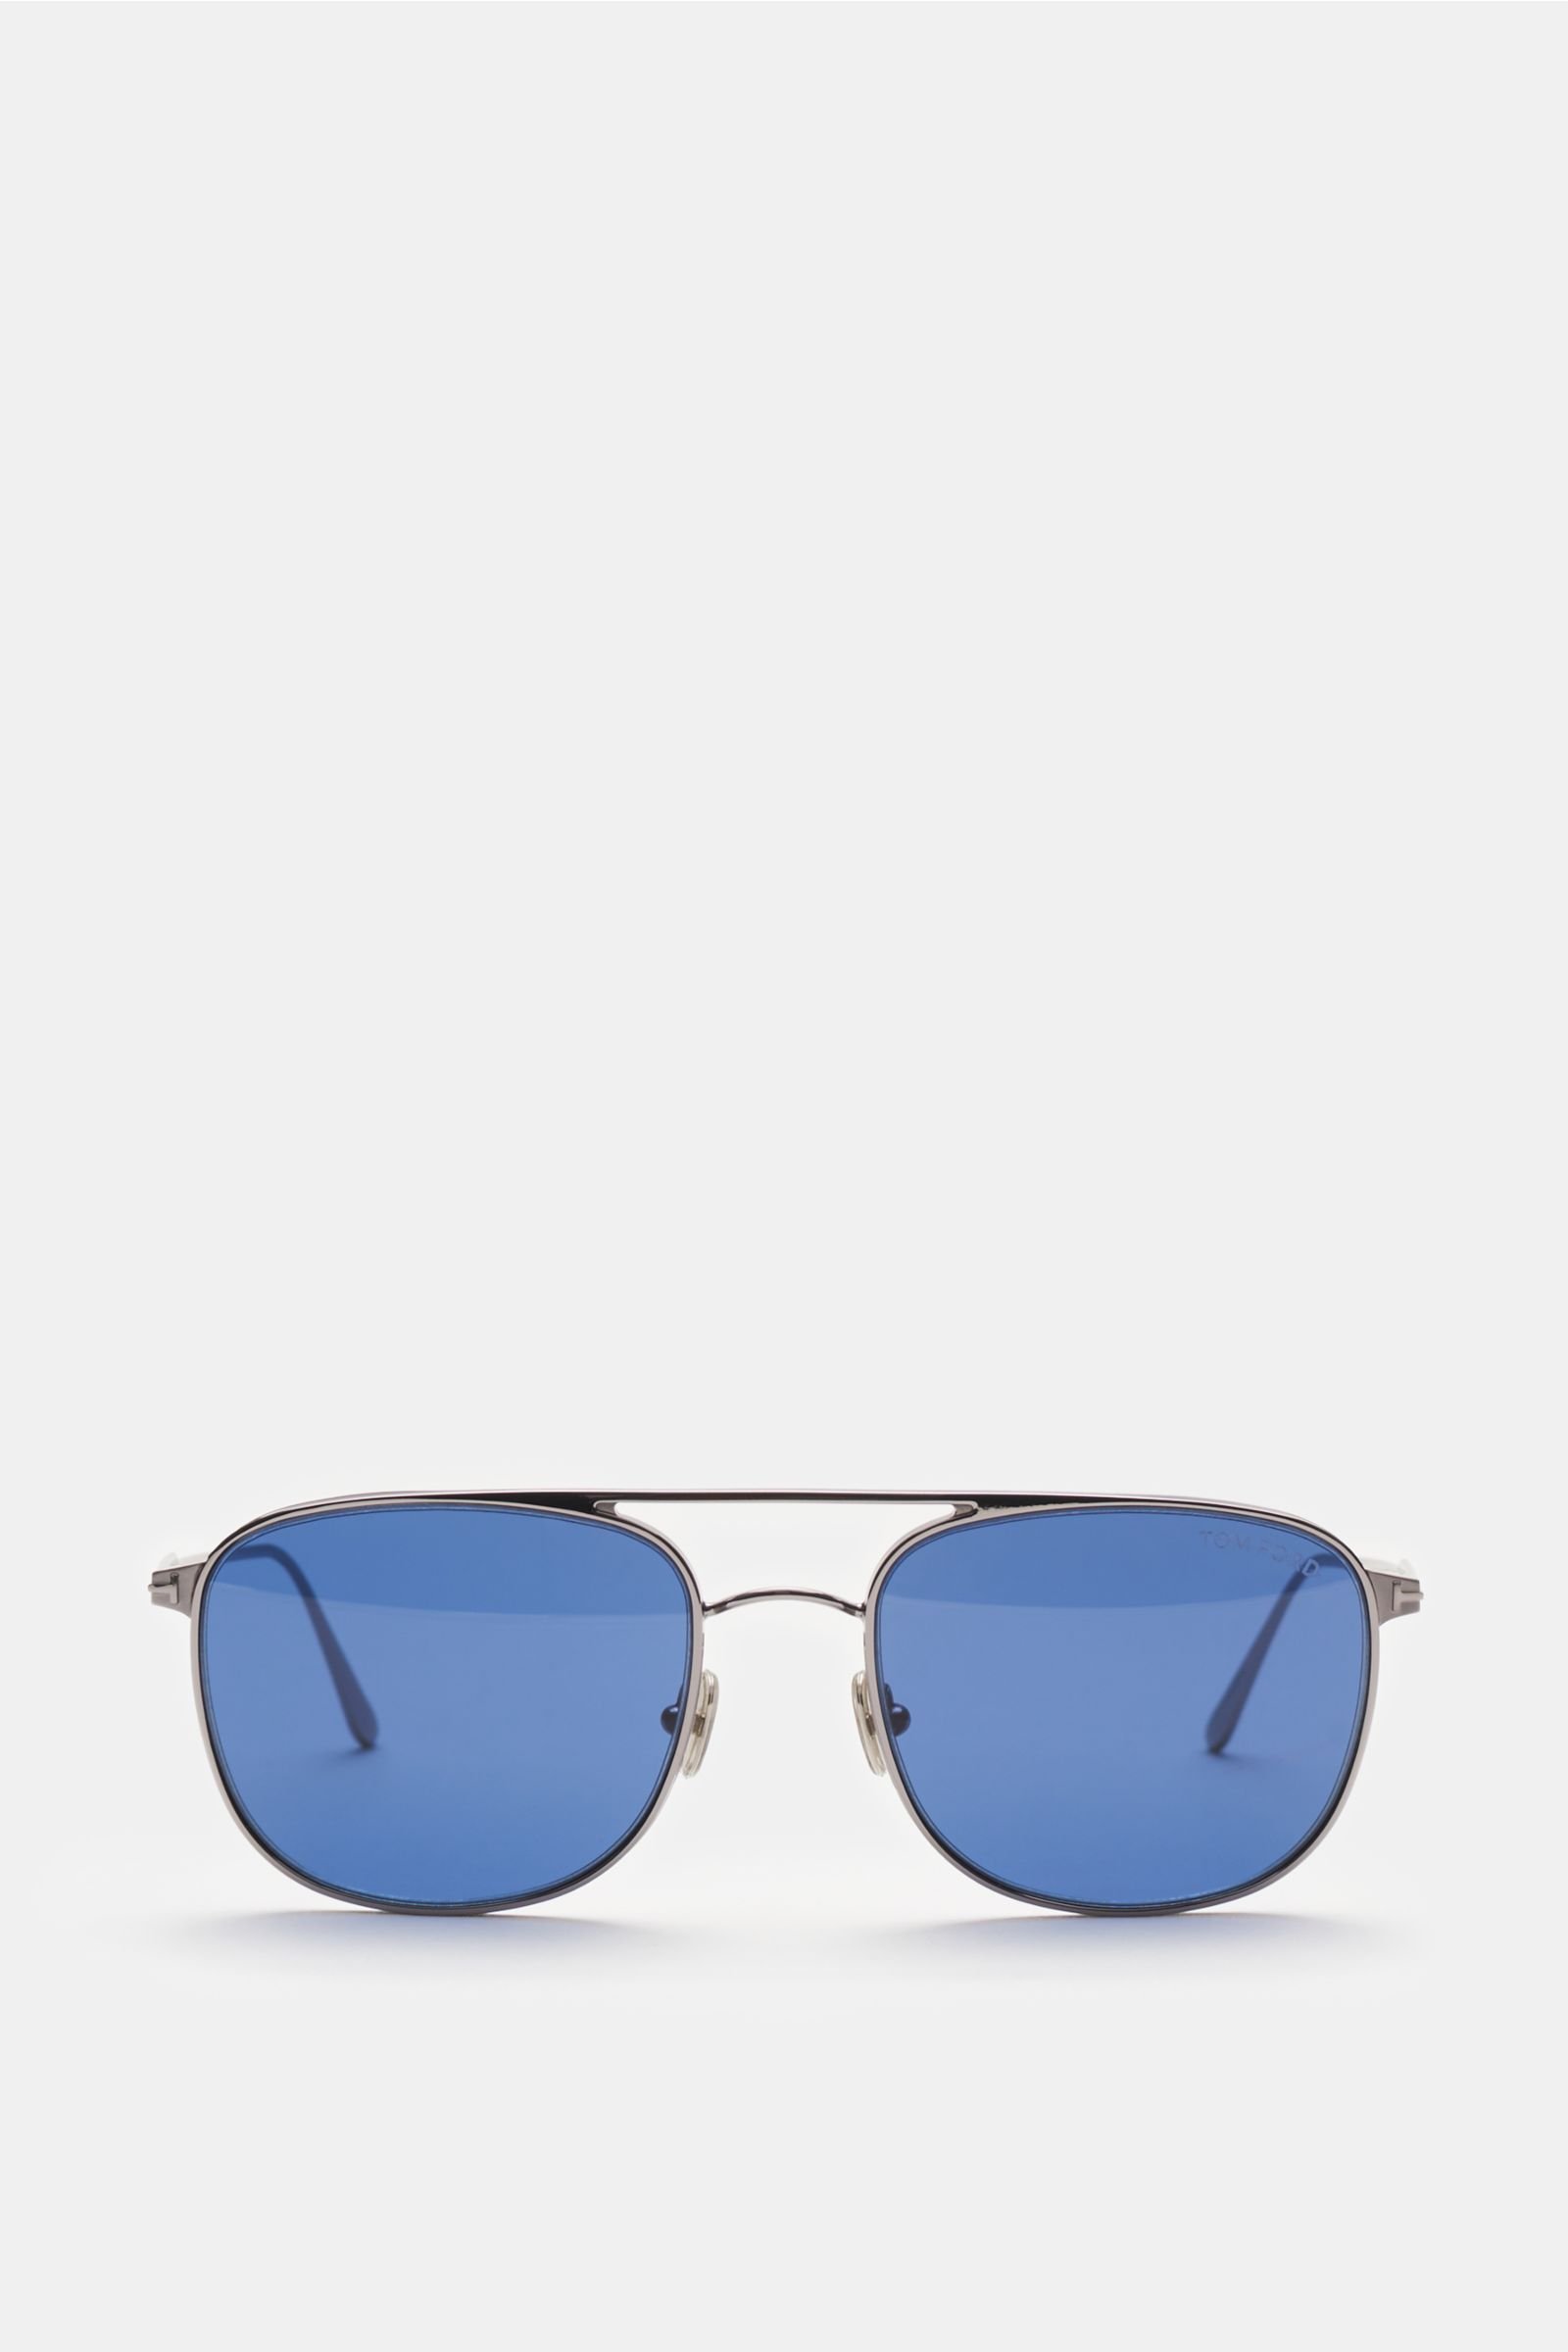 Sunglasses 'Jake' silver/dark blue